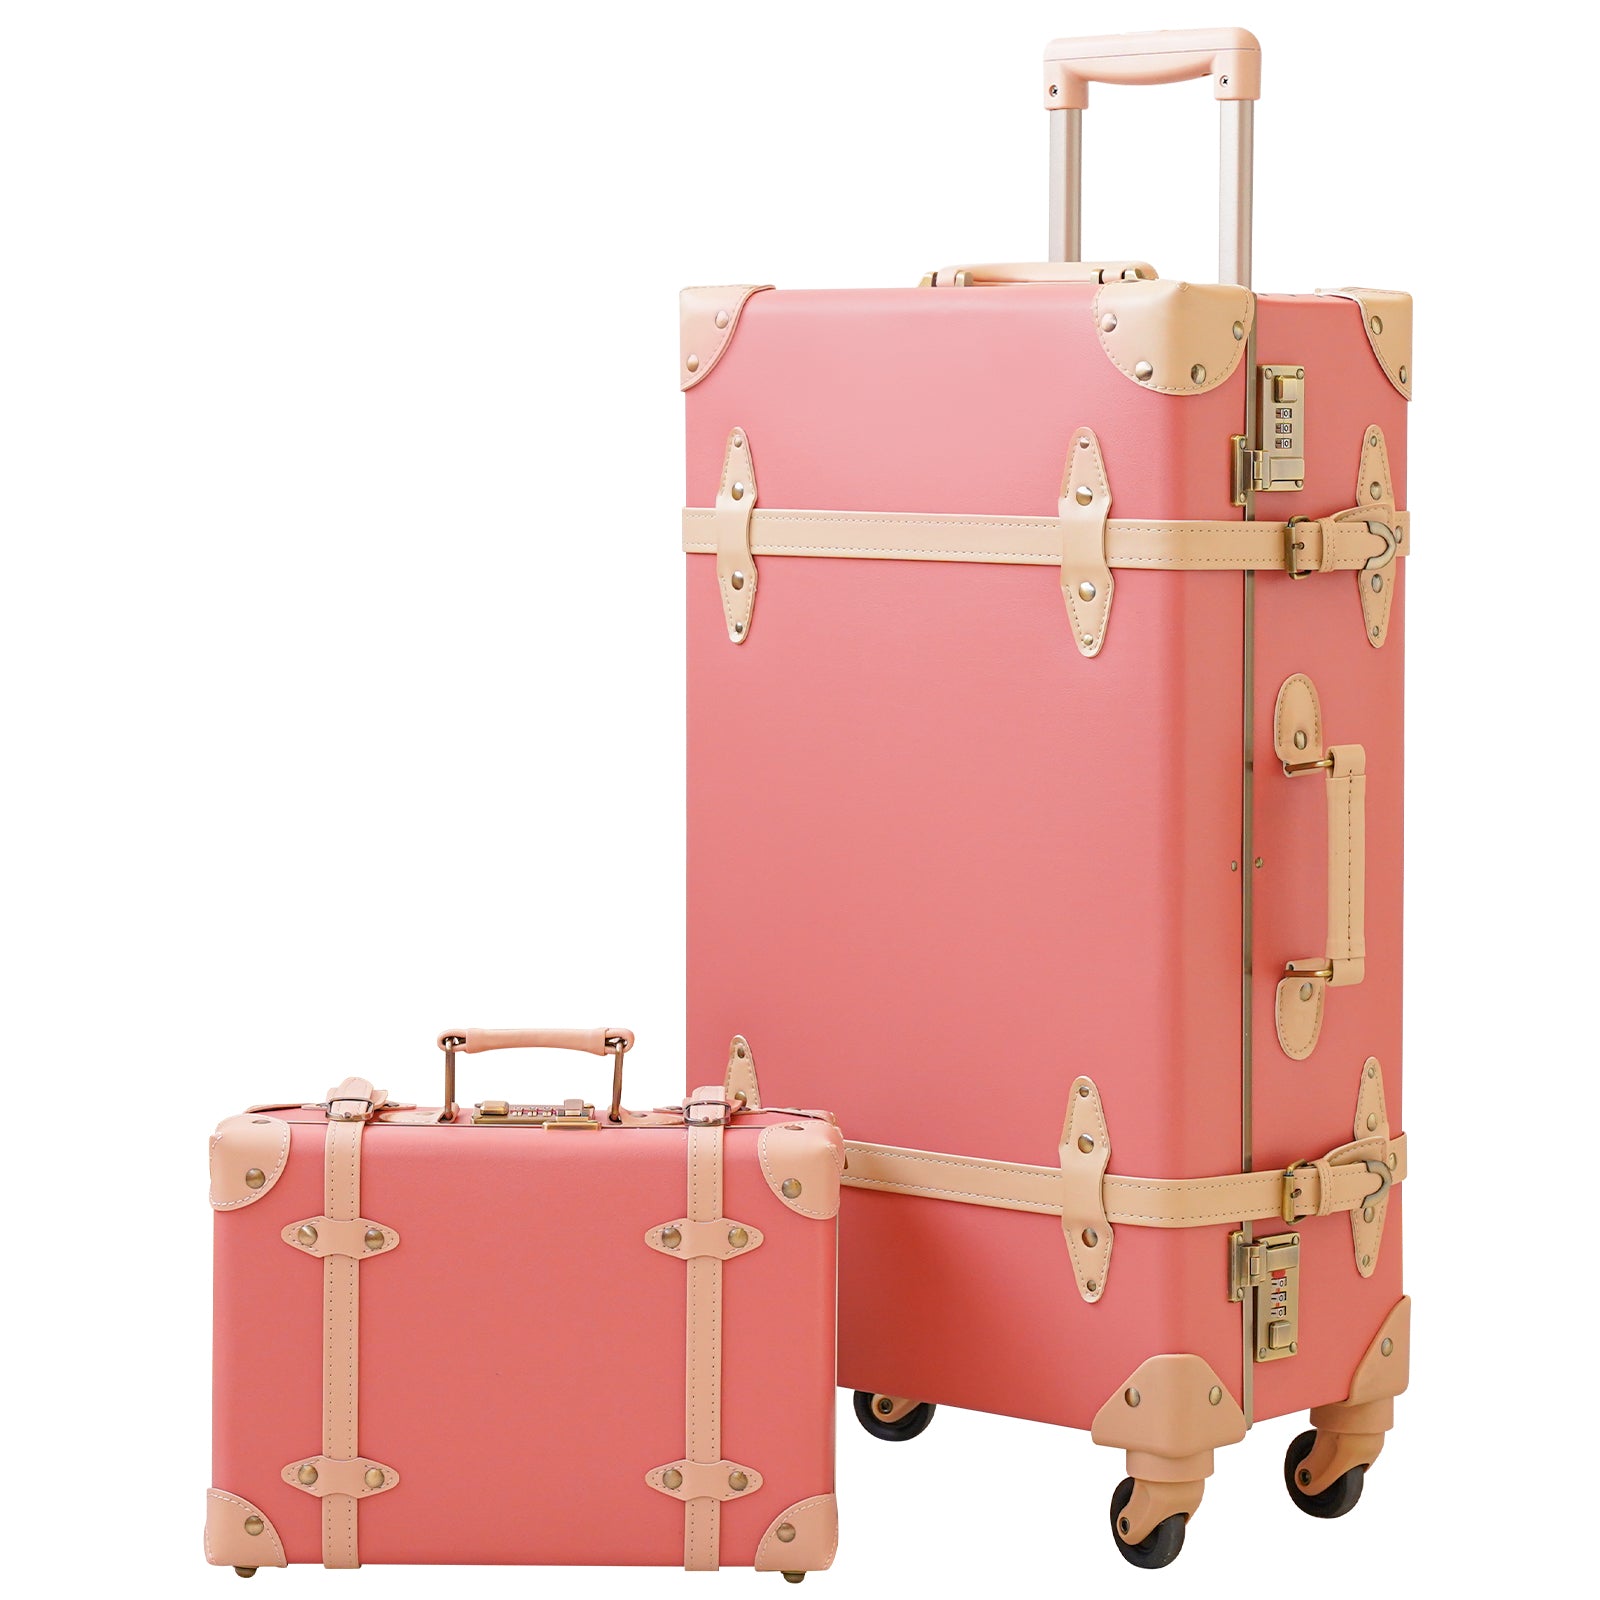 urecity vintage suitcase set for women, vintage luggage sets for women 2  piece, cute designer trunk luggage, retro suit case (Cherry Pink) 26# 20#